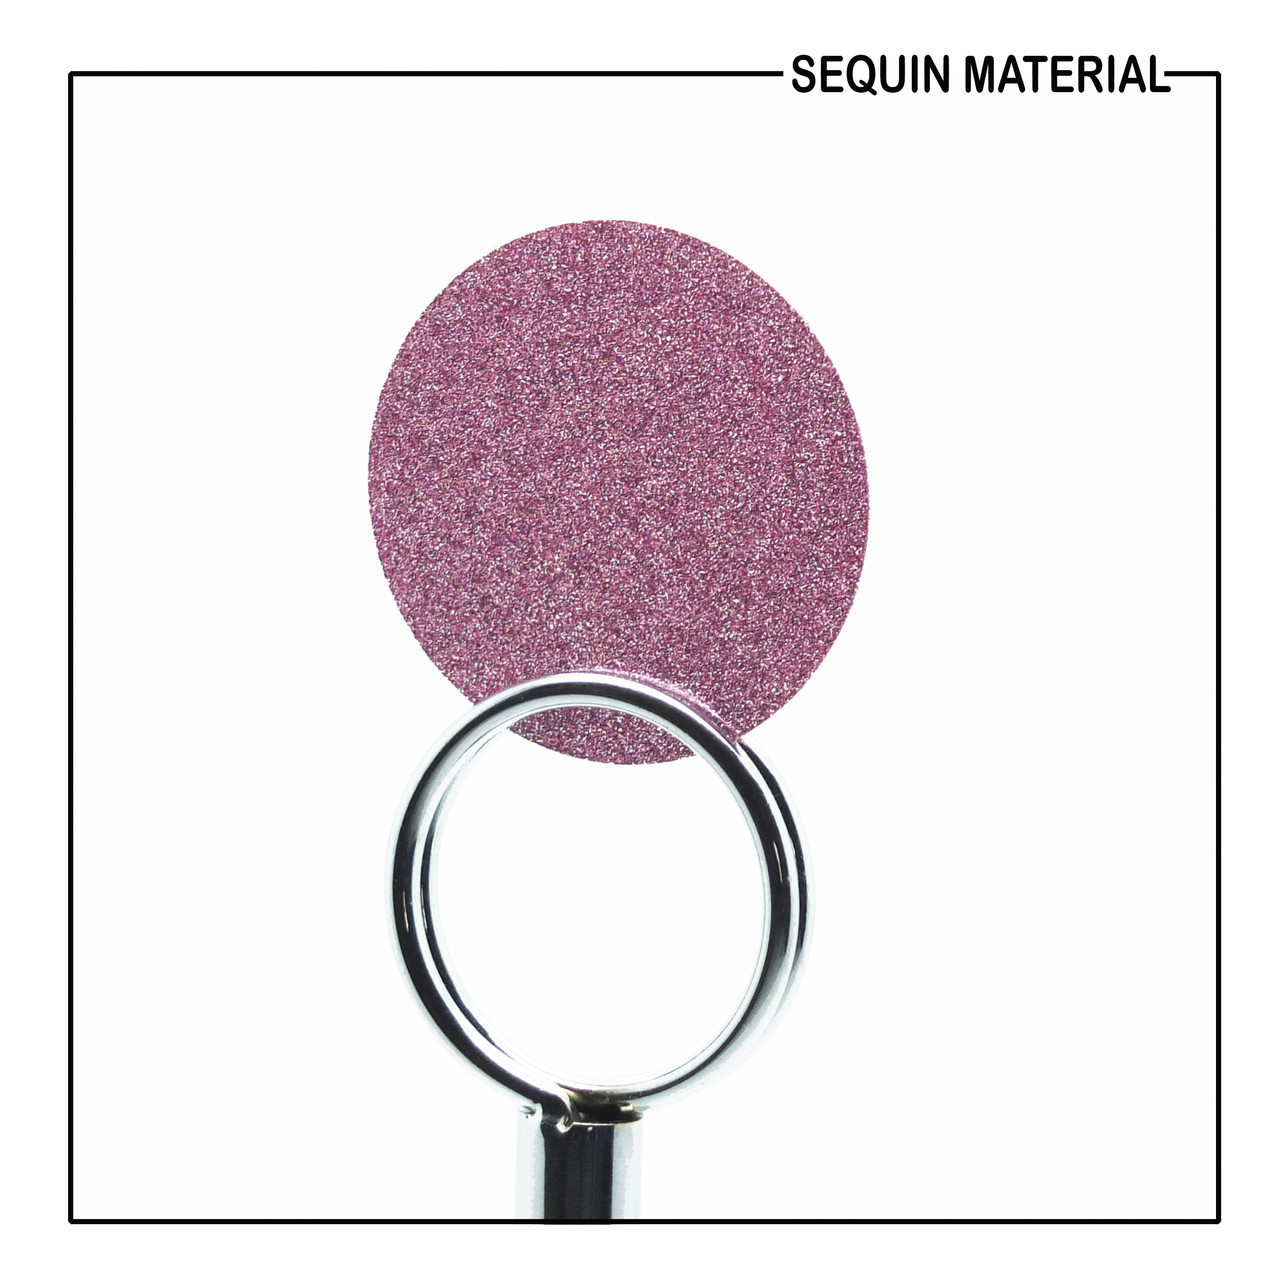 SequinsUSA Pink Sparkle Glitter Texture Sequin Material RL434